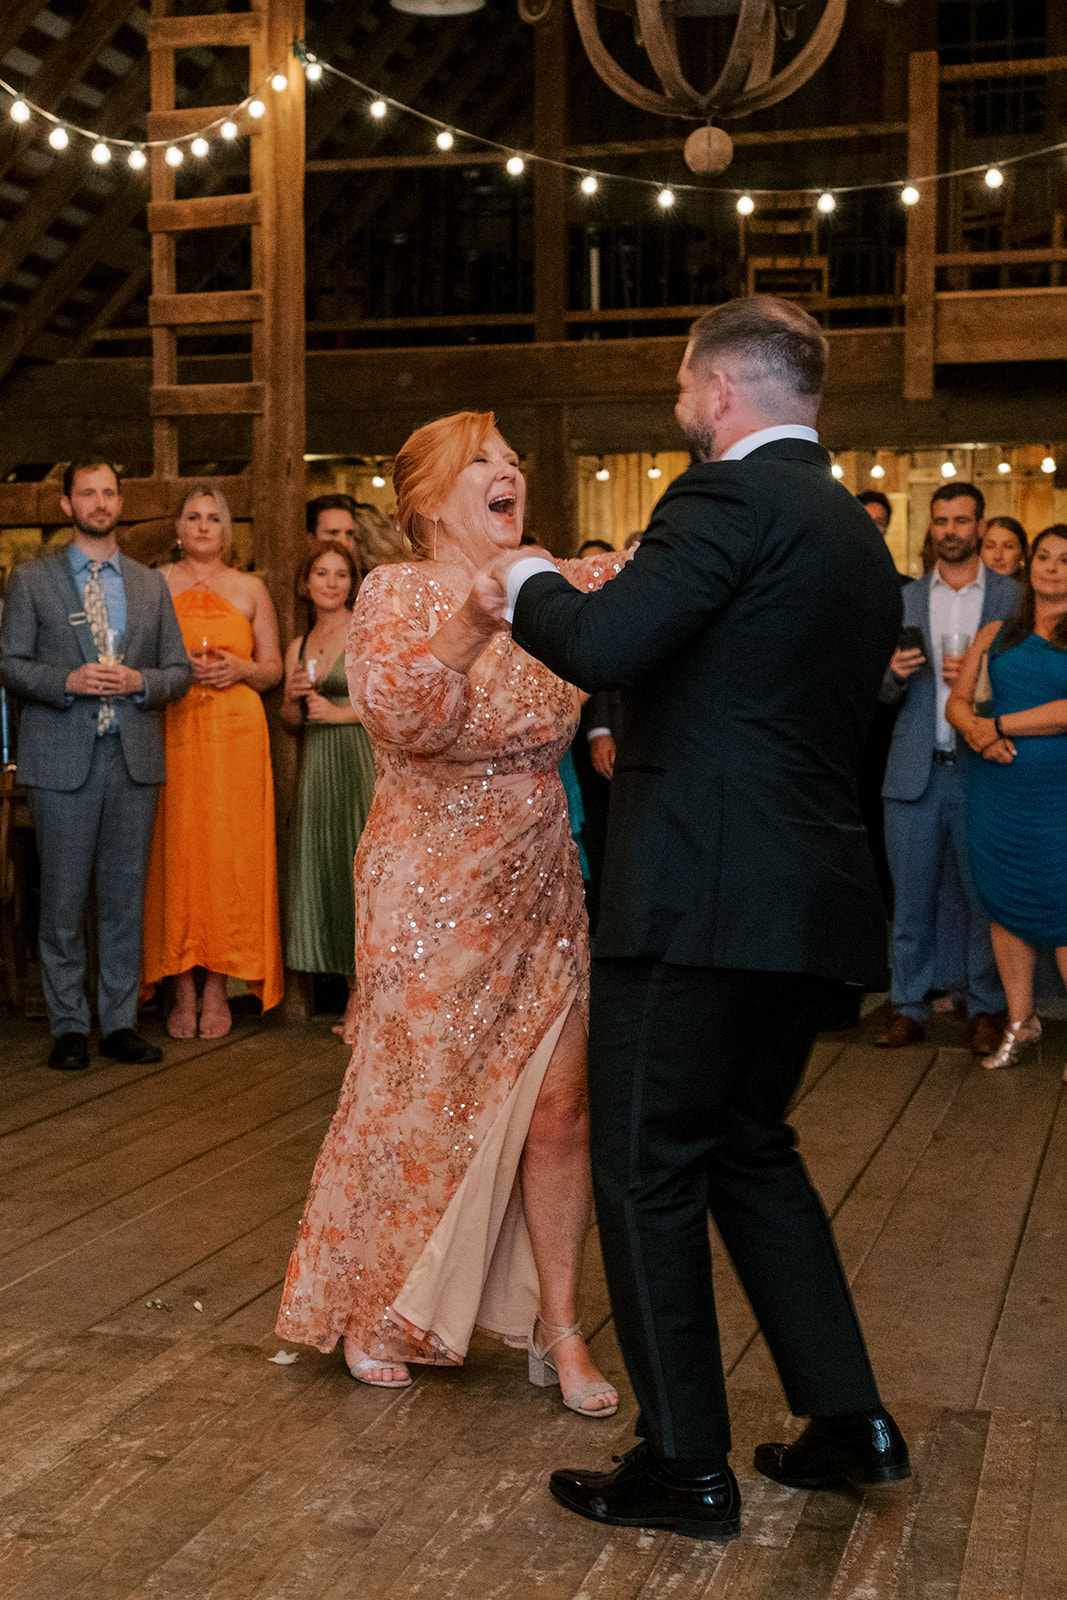 Mother son dance at Virginia barn wedding reception